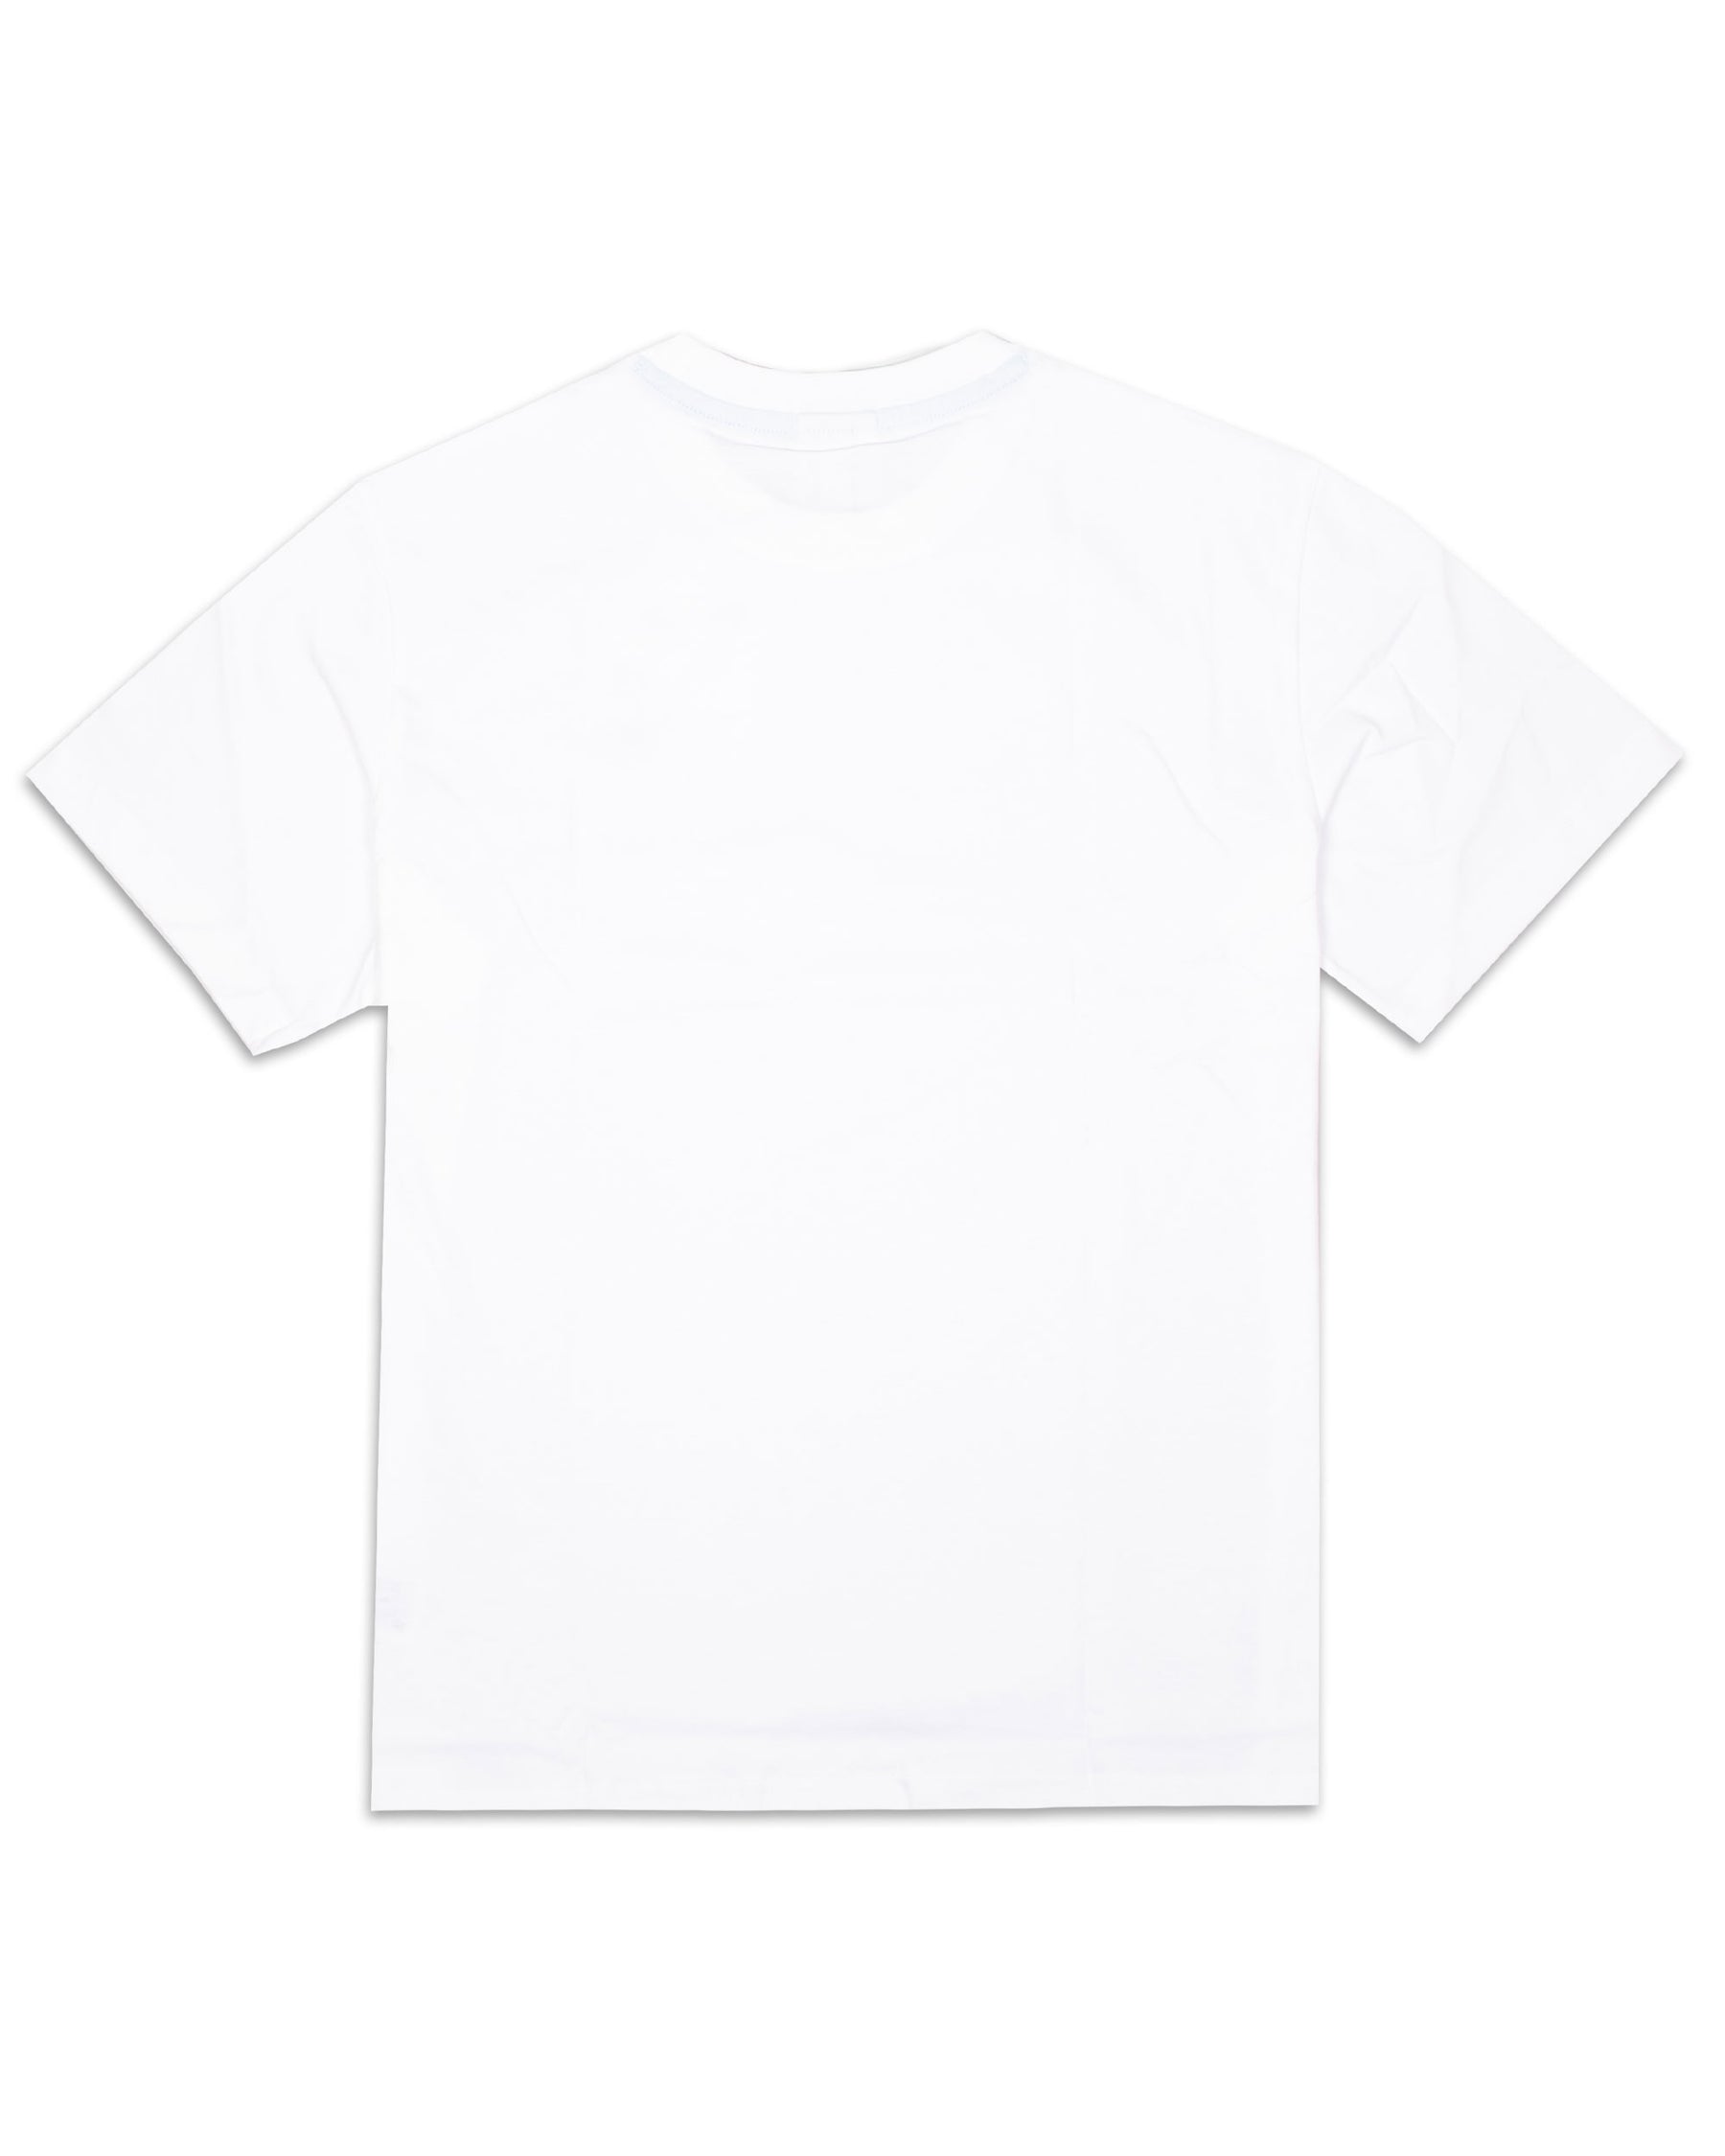 T-Shirt Uomo Lacoste Live Classic logo Bianca